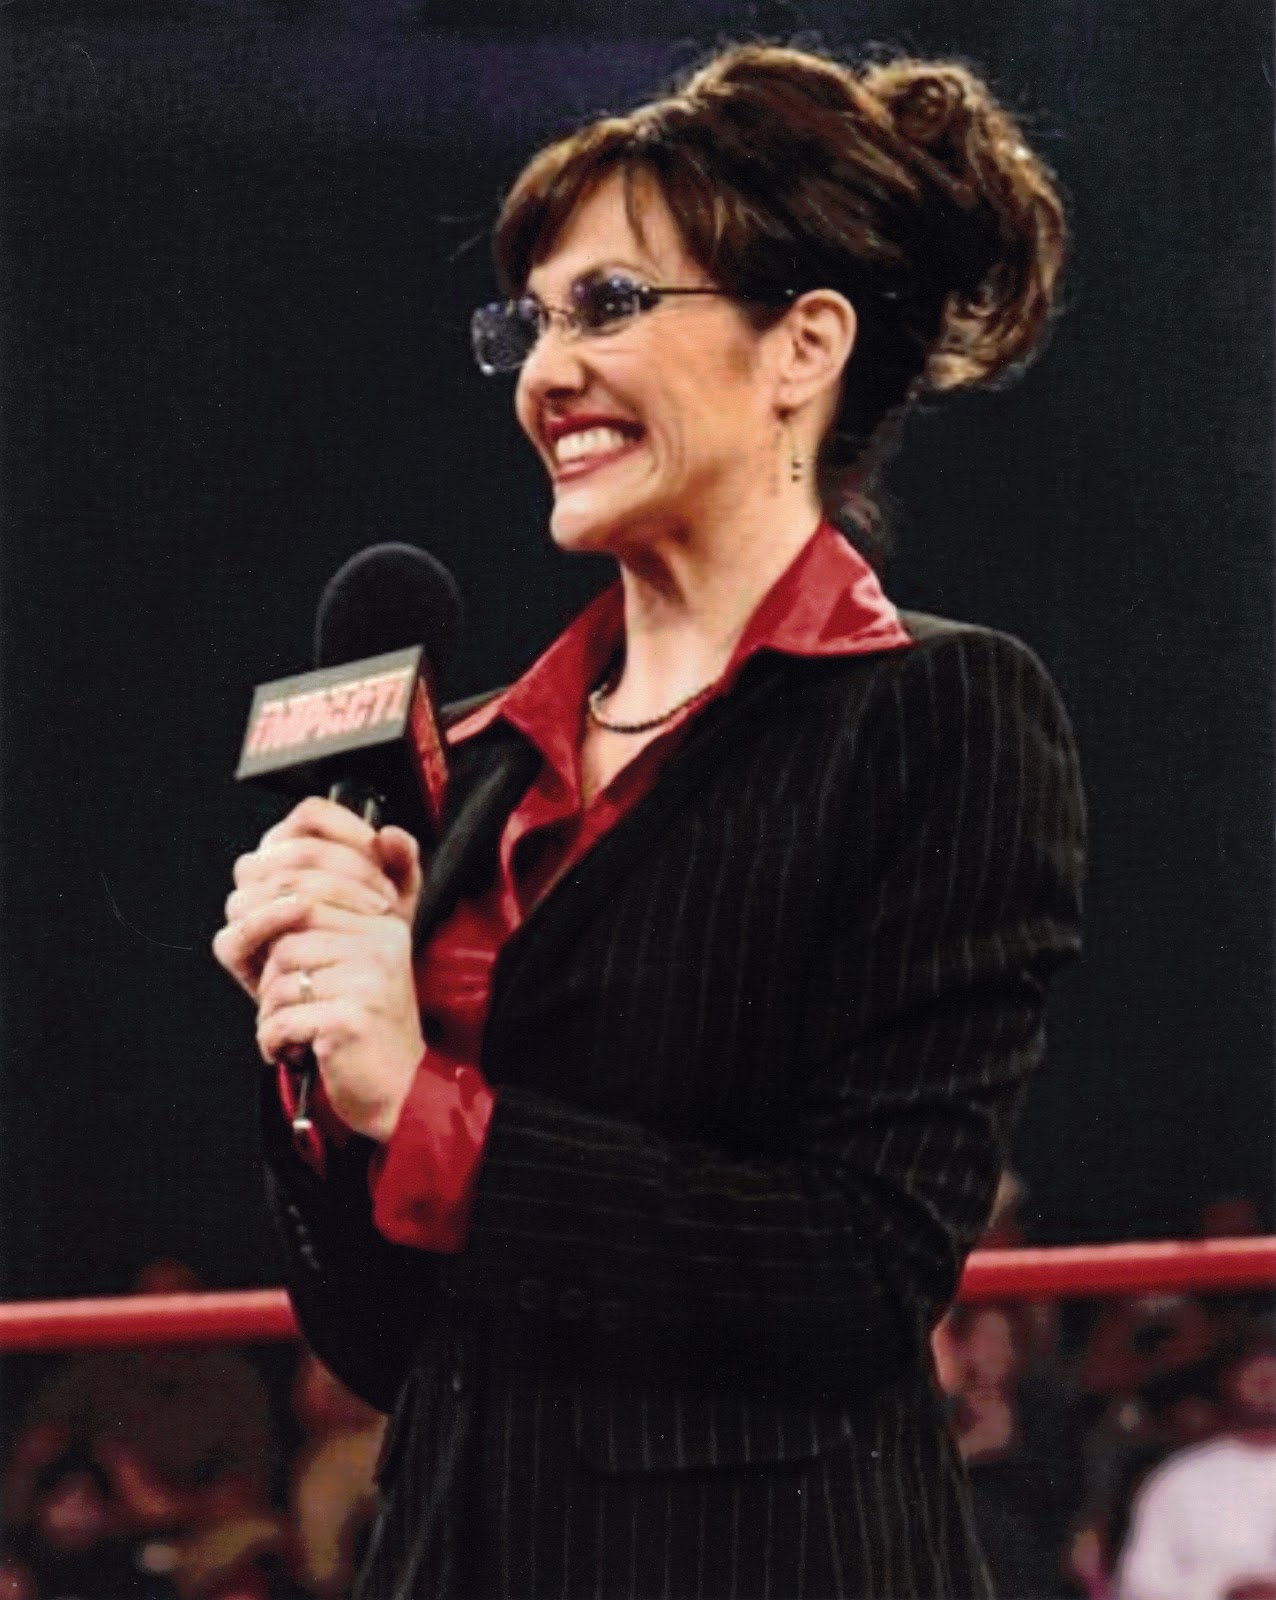 TNA knockout with a Sarah Palin-like gimmick. 